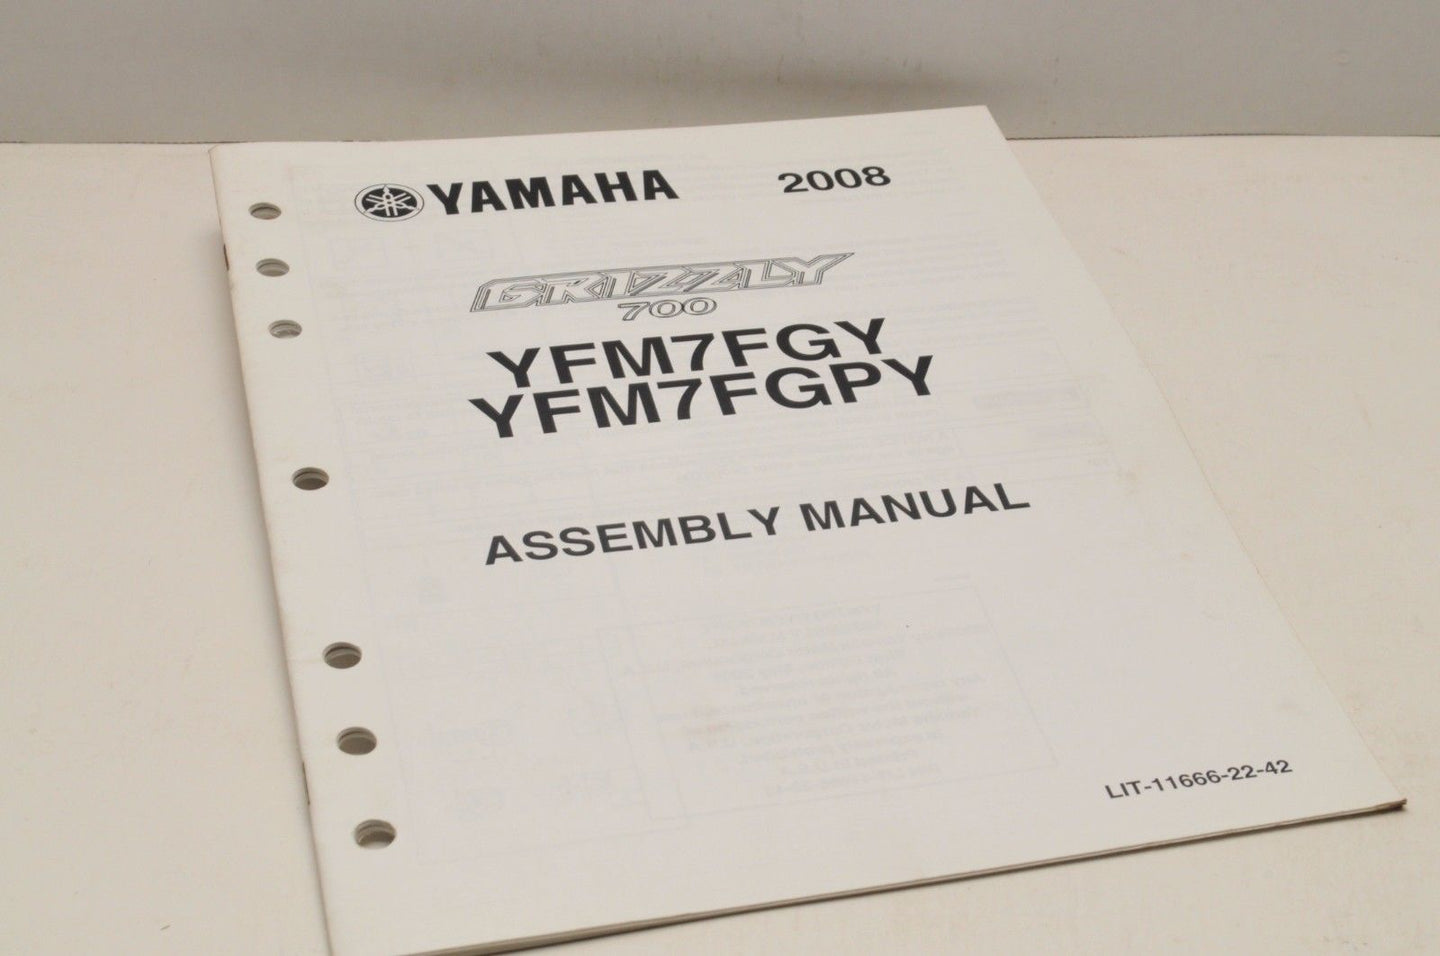 Genuine Yamaha ASSEMBLY SETUP MANUAL YFM7FGPY GRIZZLY 700 2008 LIT-11666-22-42